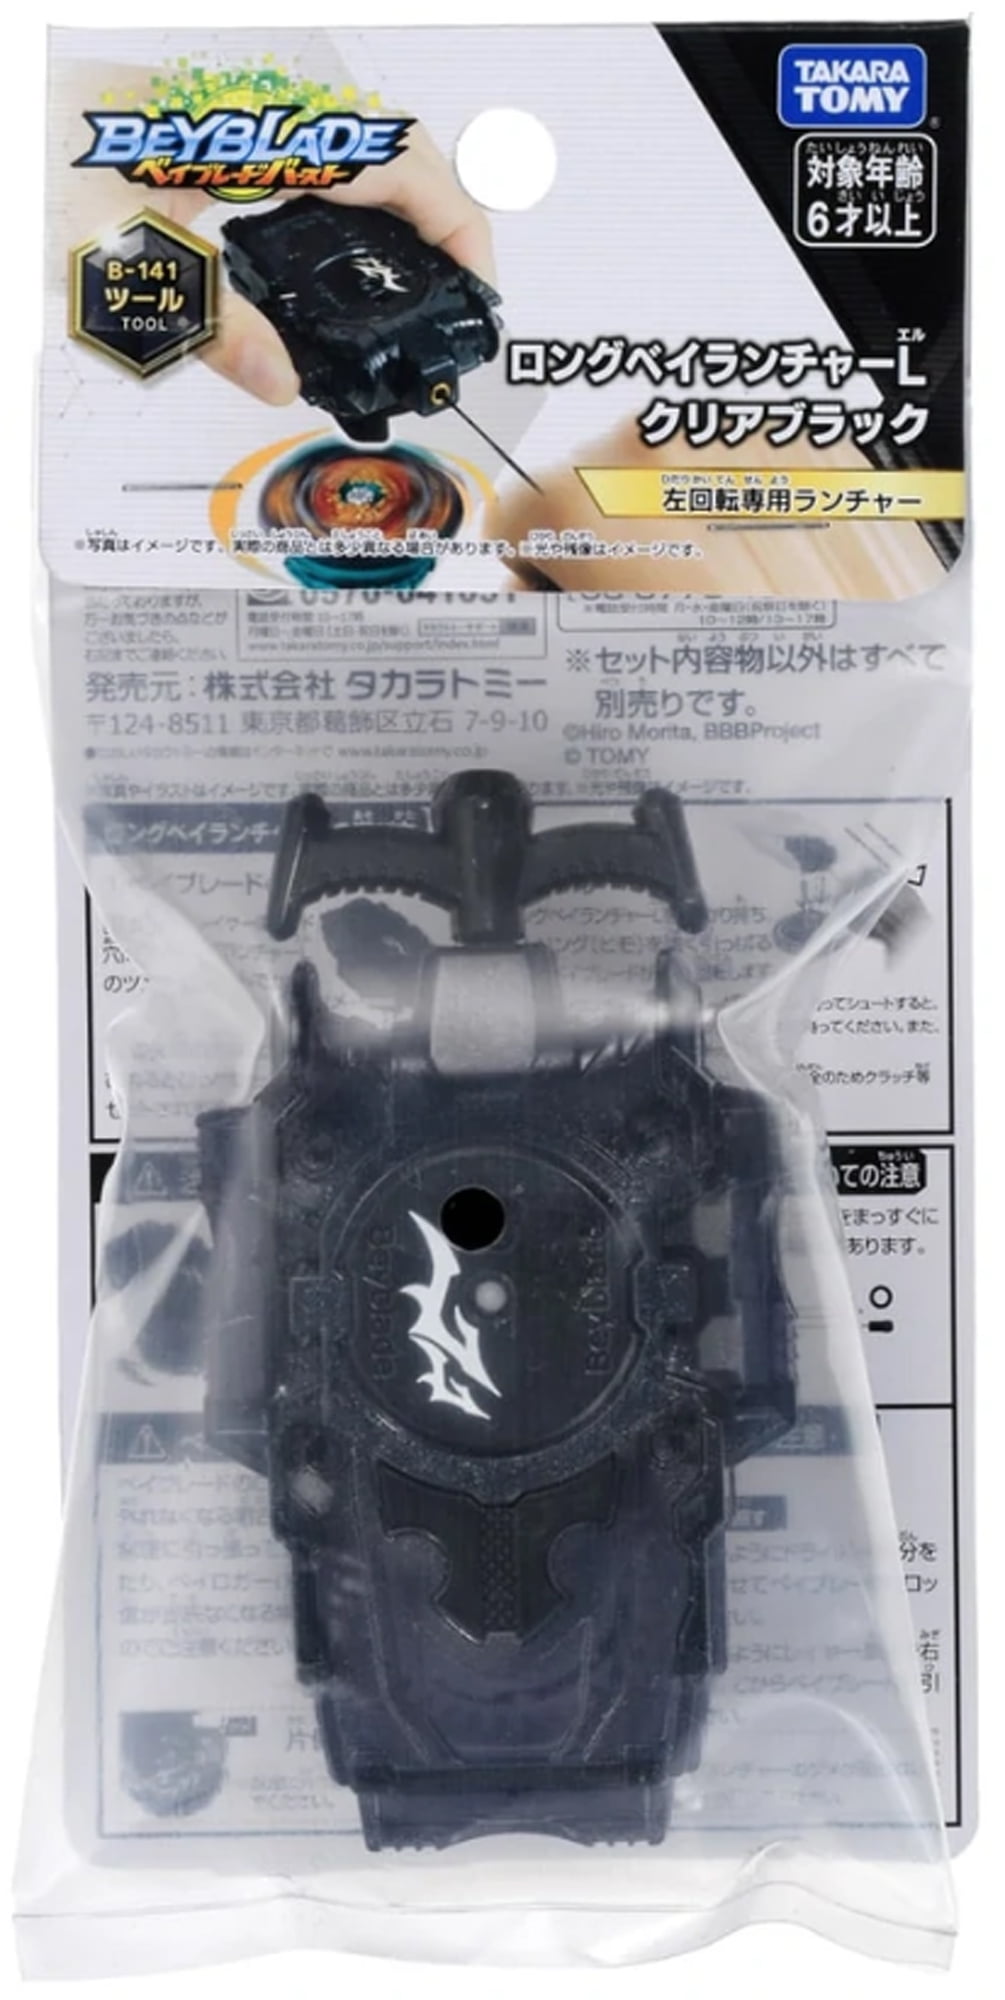 Beyblade Burst B-40 Launcher grip Black Genuine Takara Tomy Original 